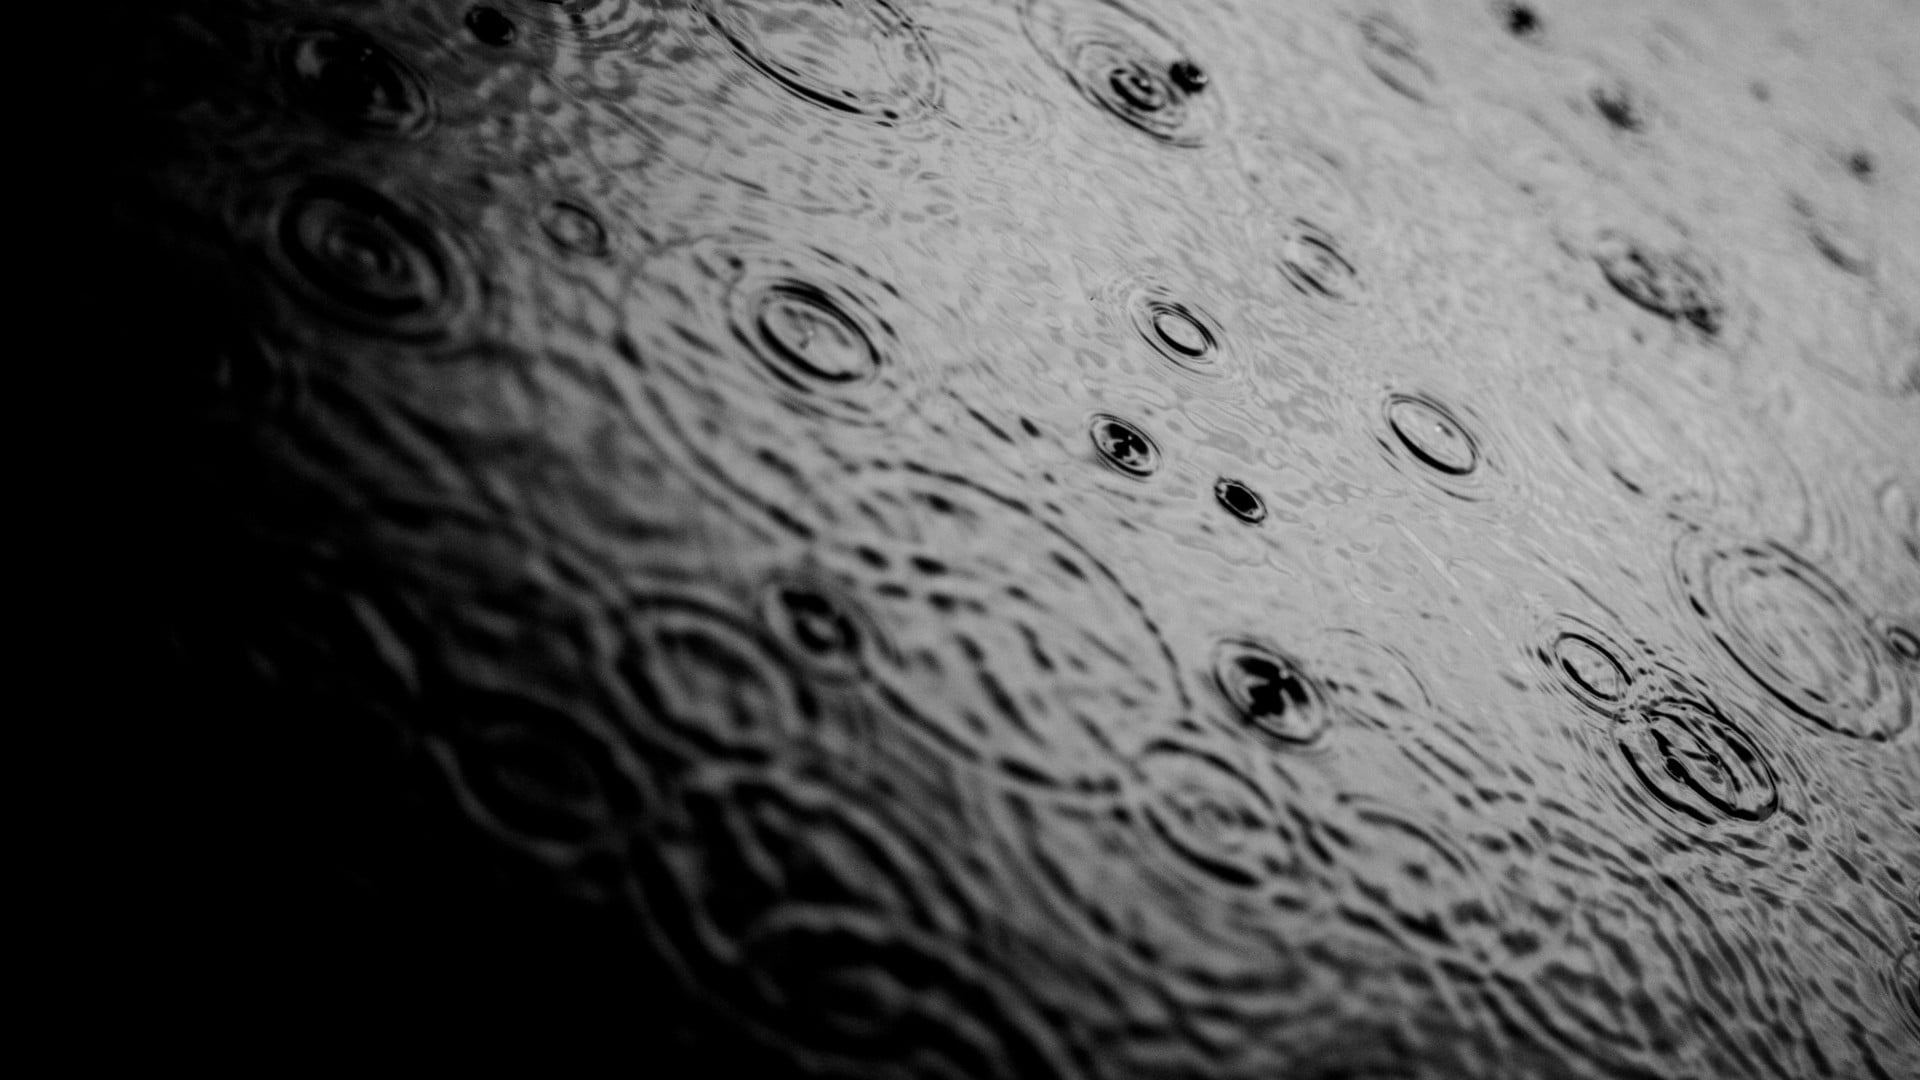 body of water, rain, nature, water drops, ripples